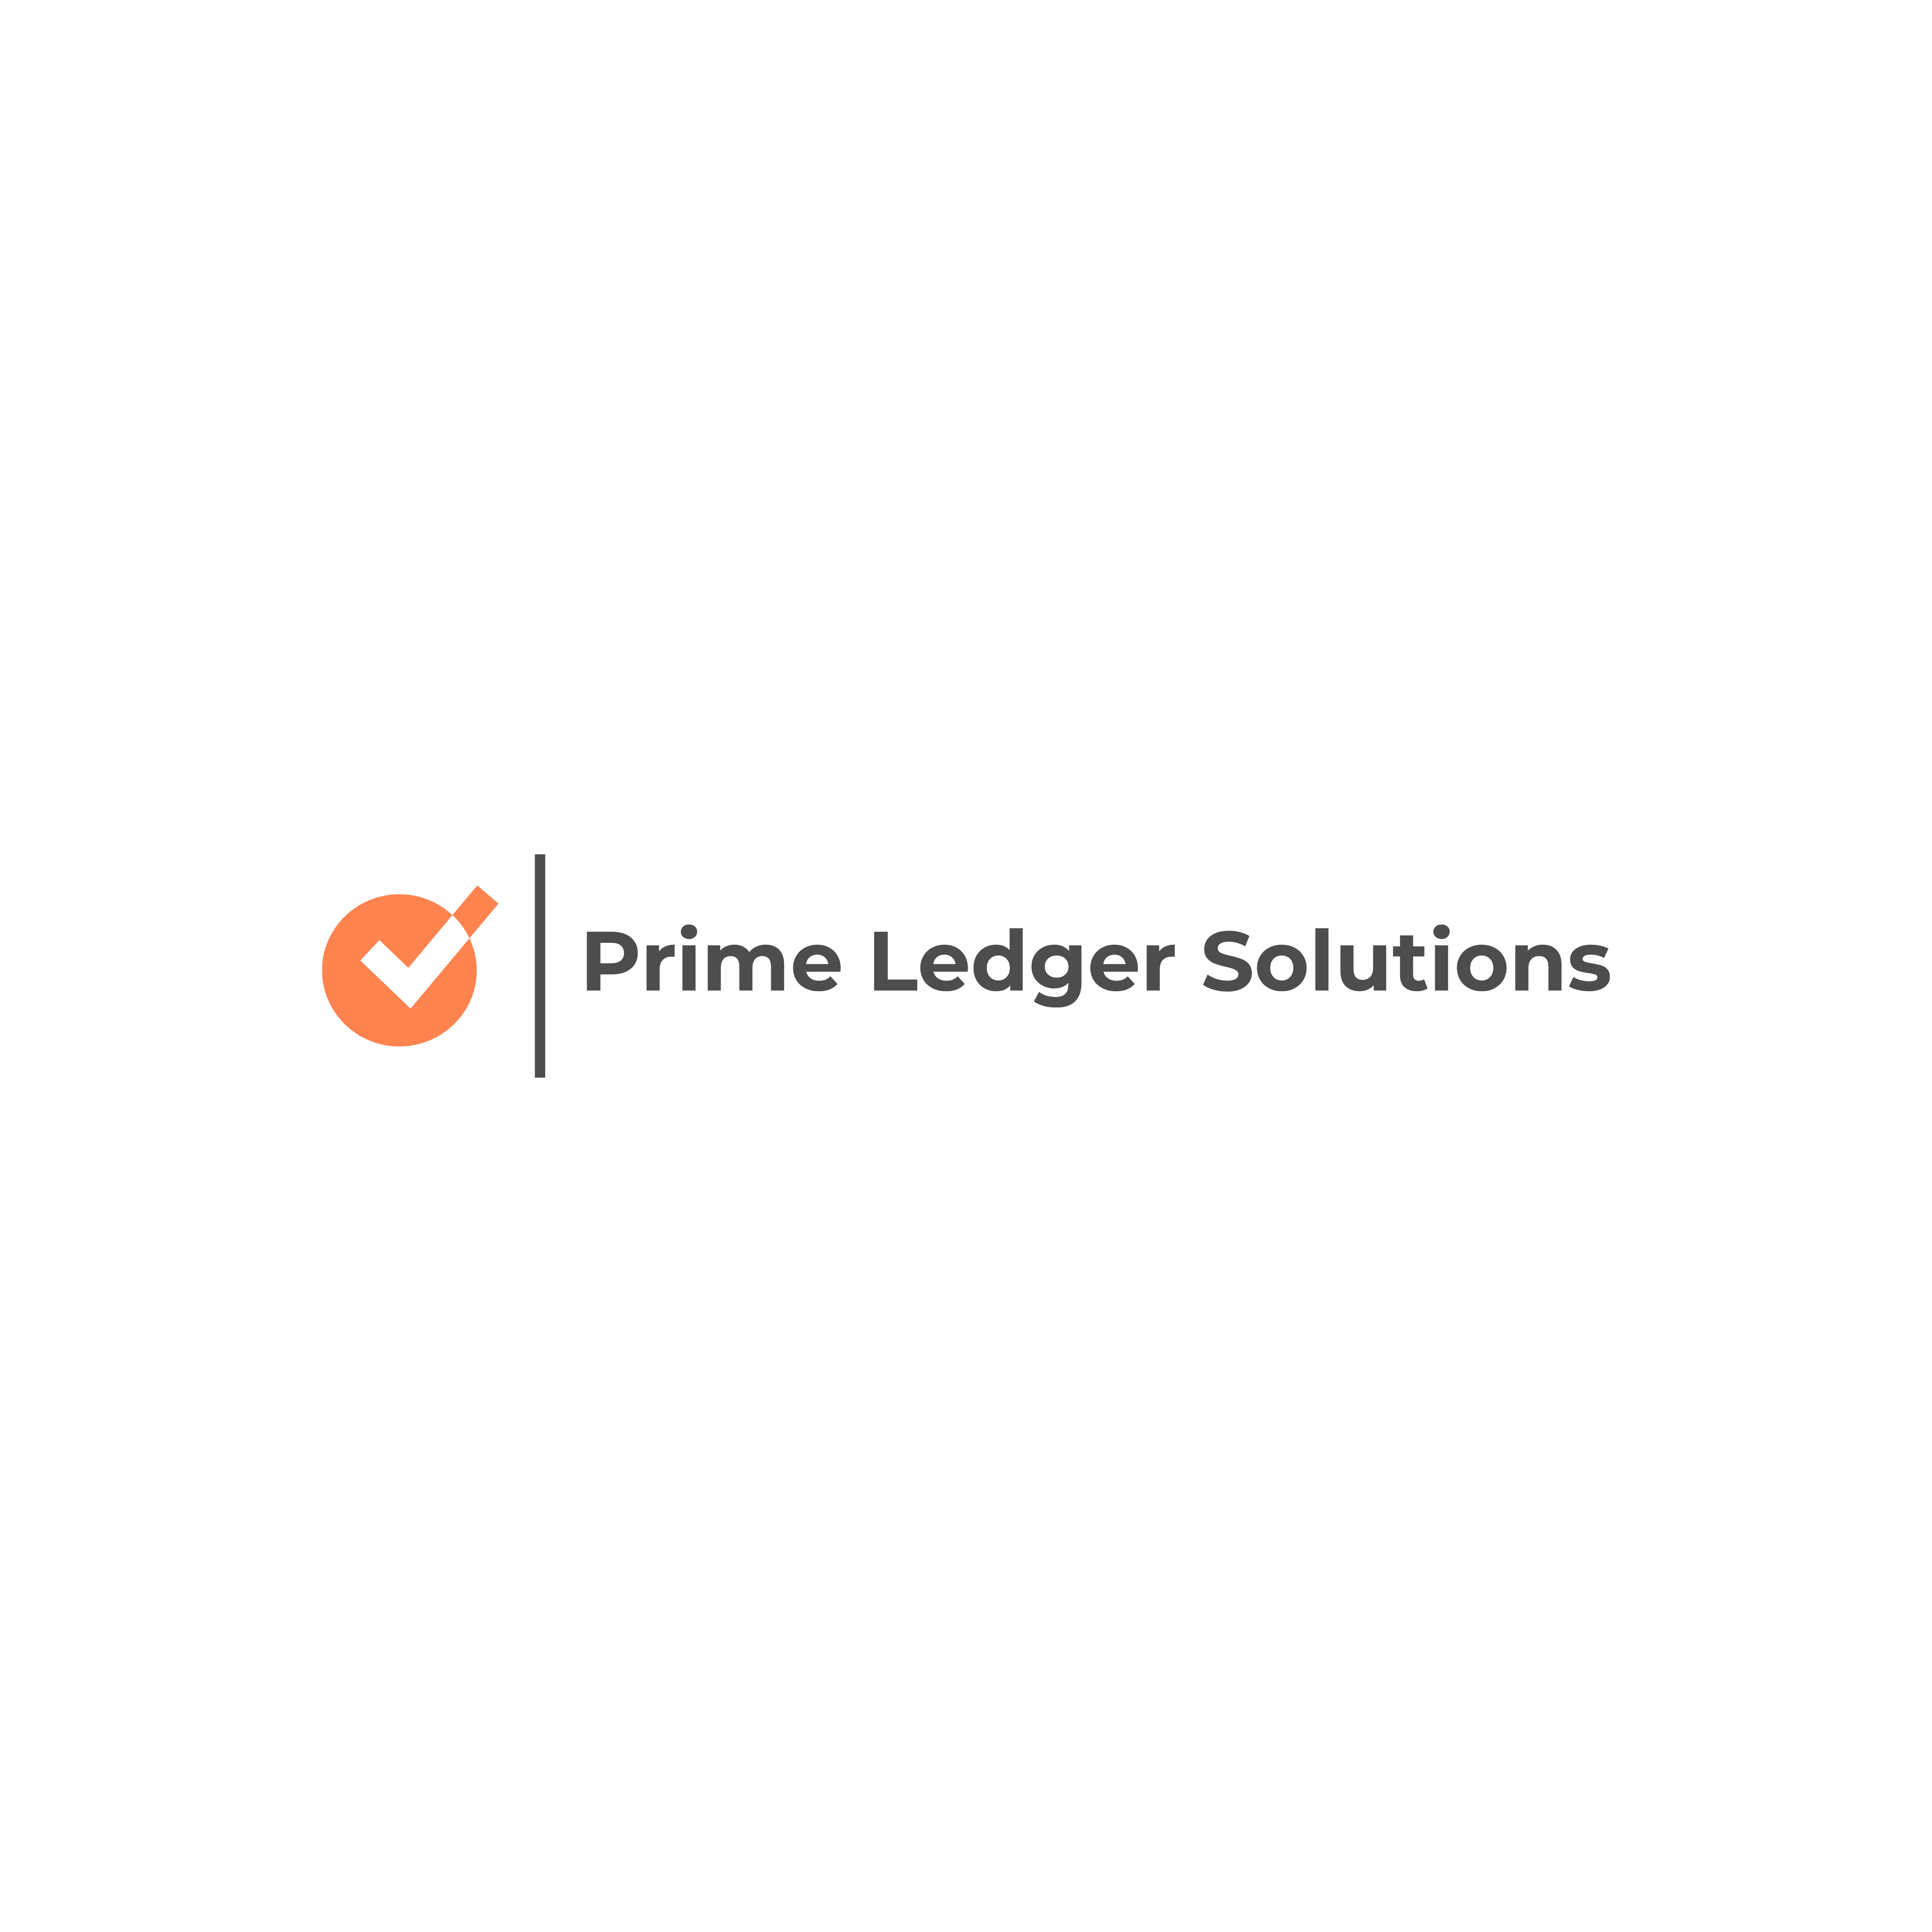 Prime Ledger Solutions